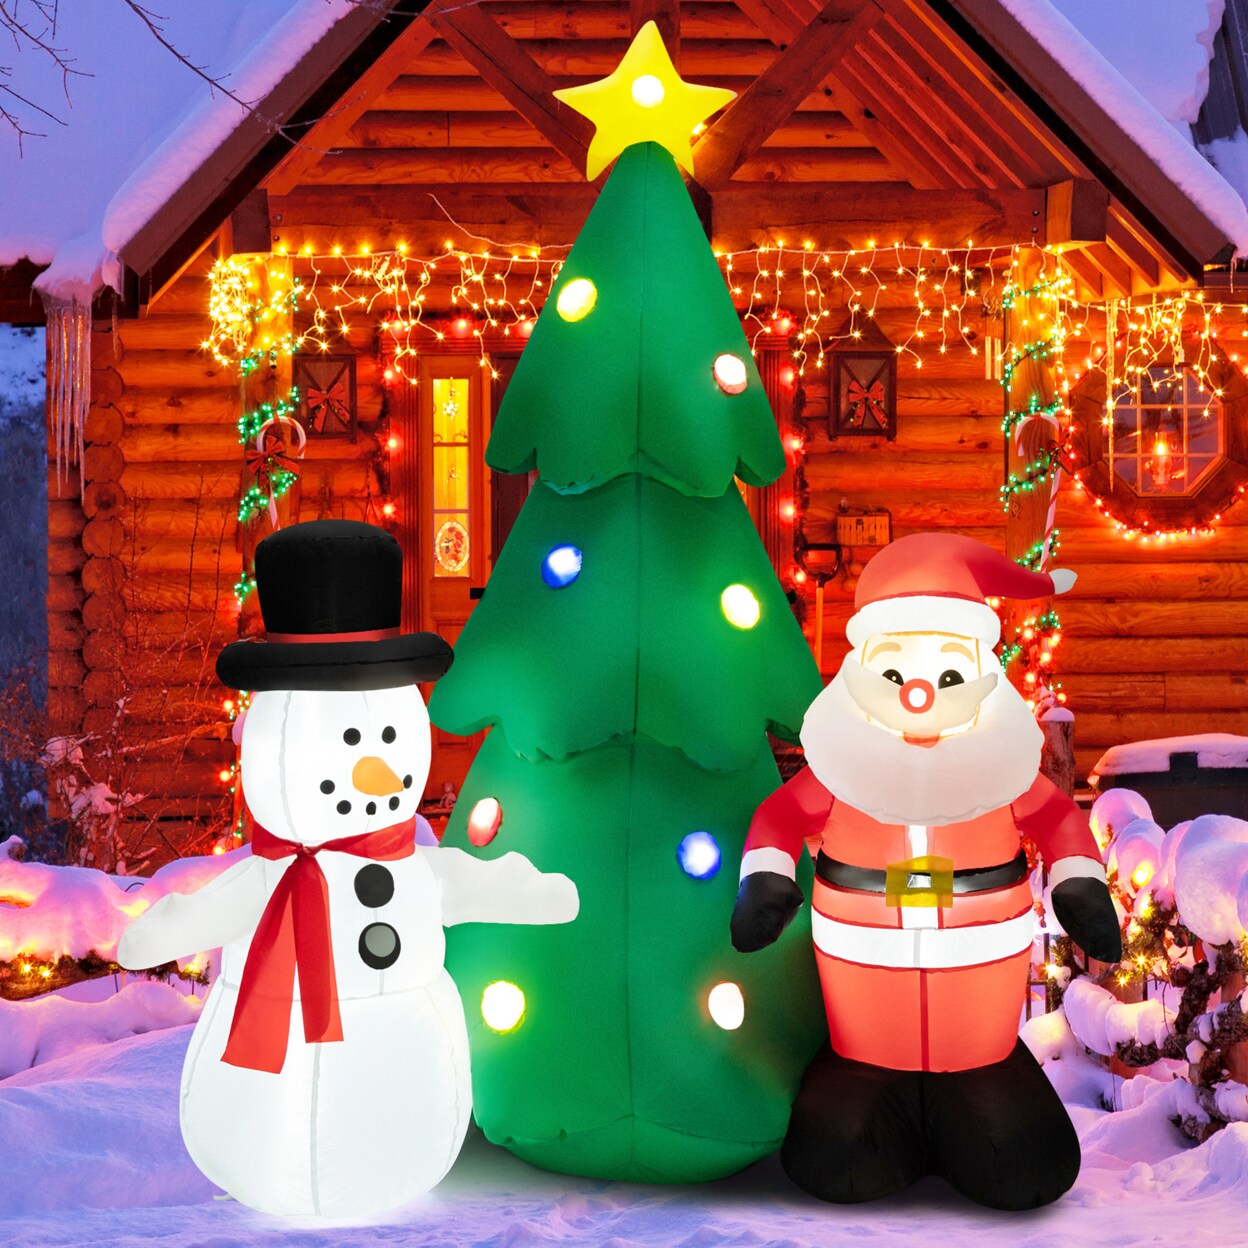 2 Pairs Children's Christmas Acrylic Santa Claus & Snowman Pendant